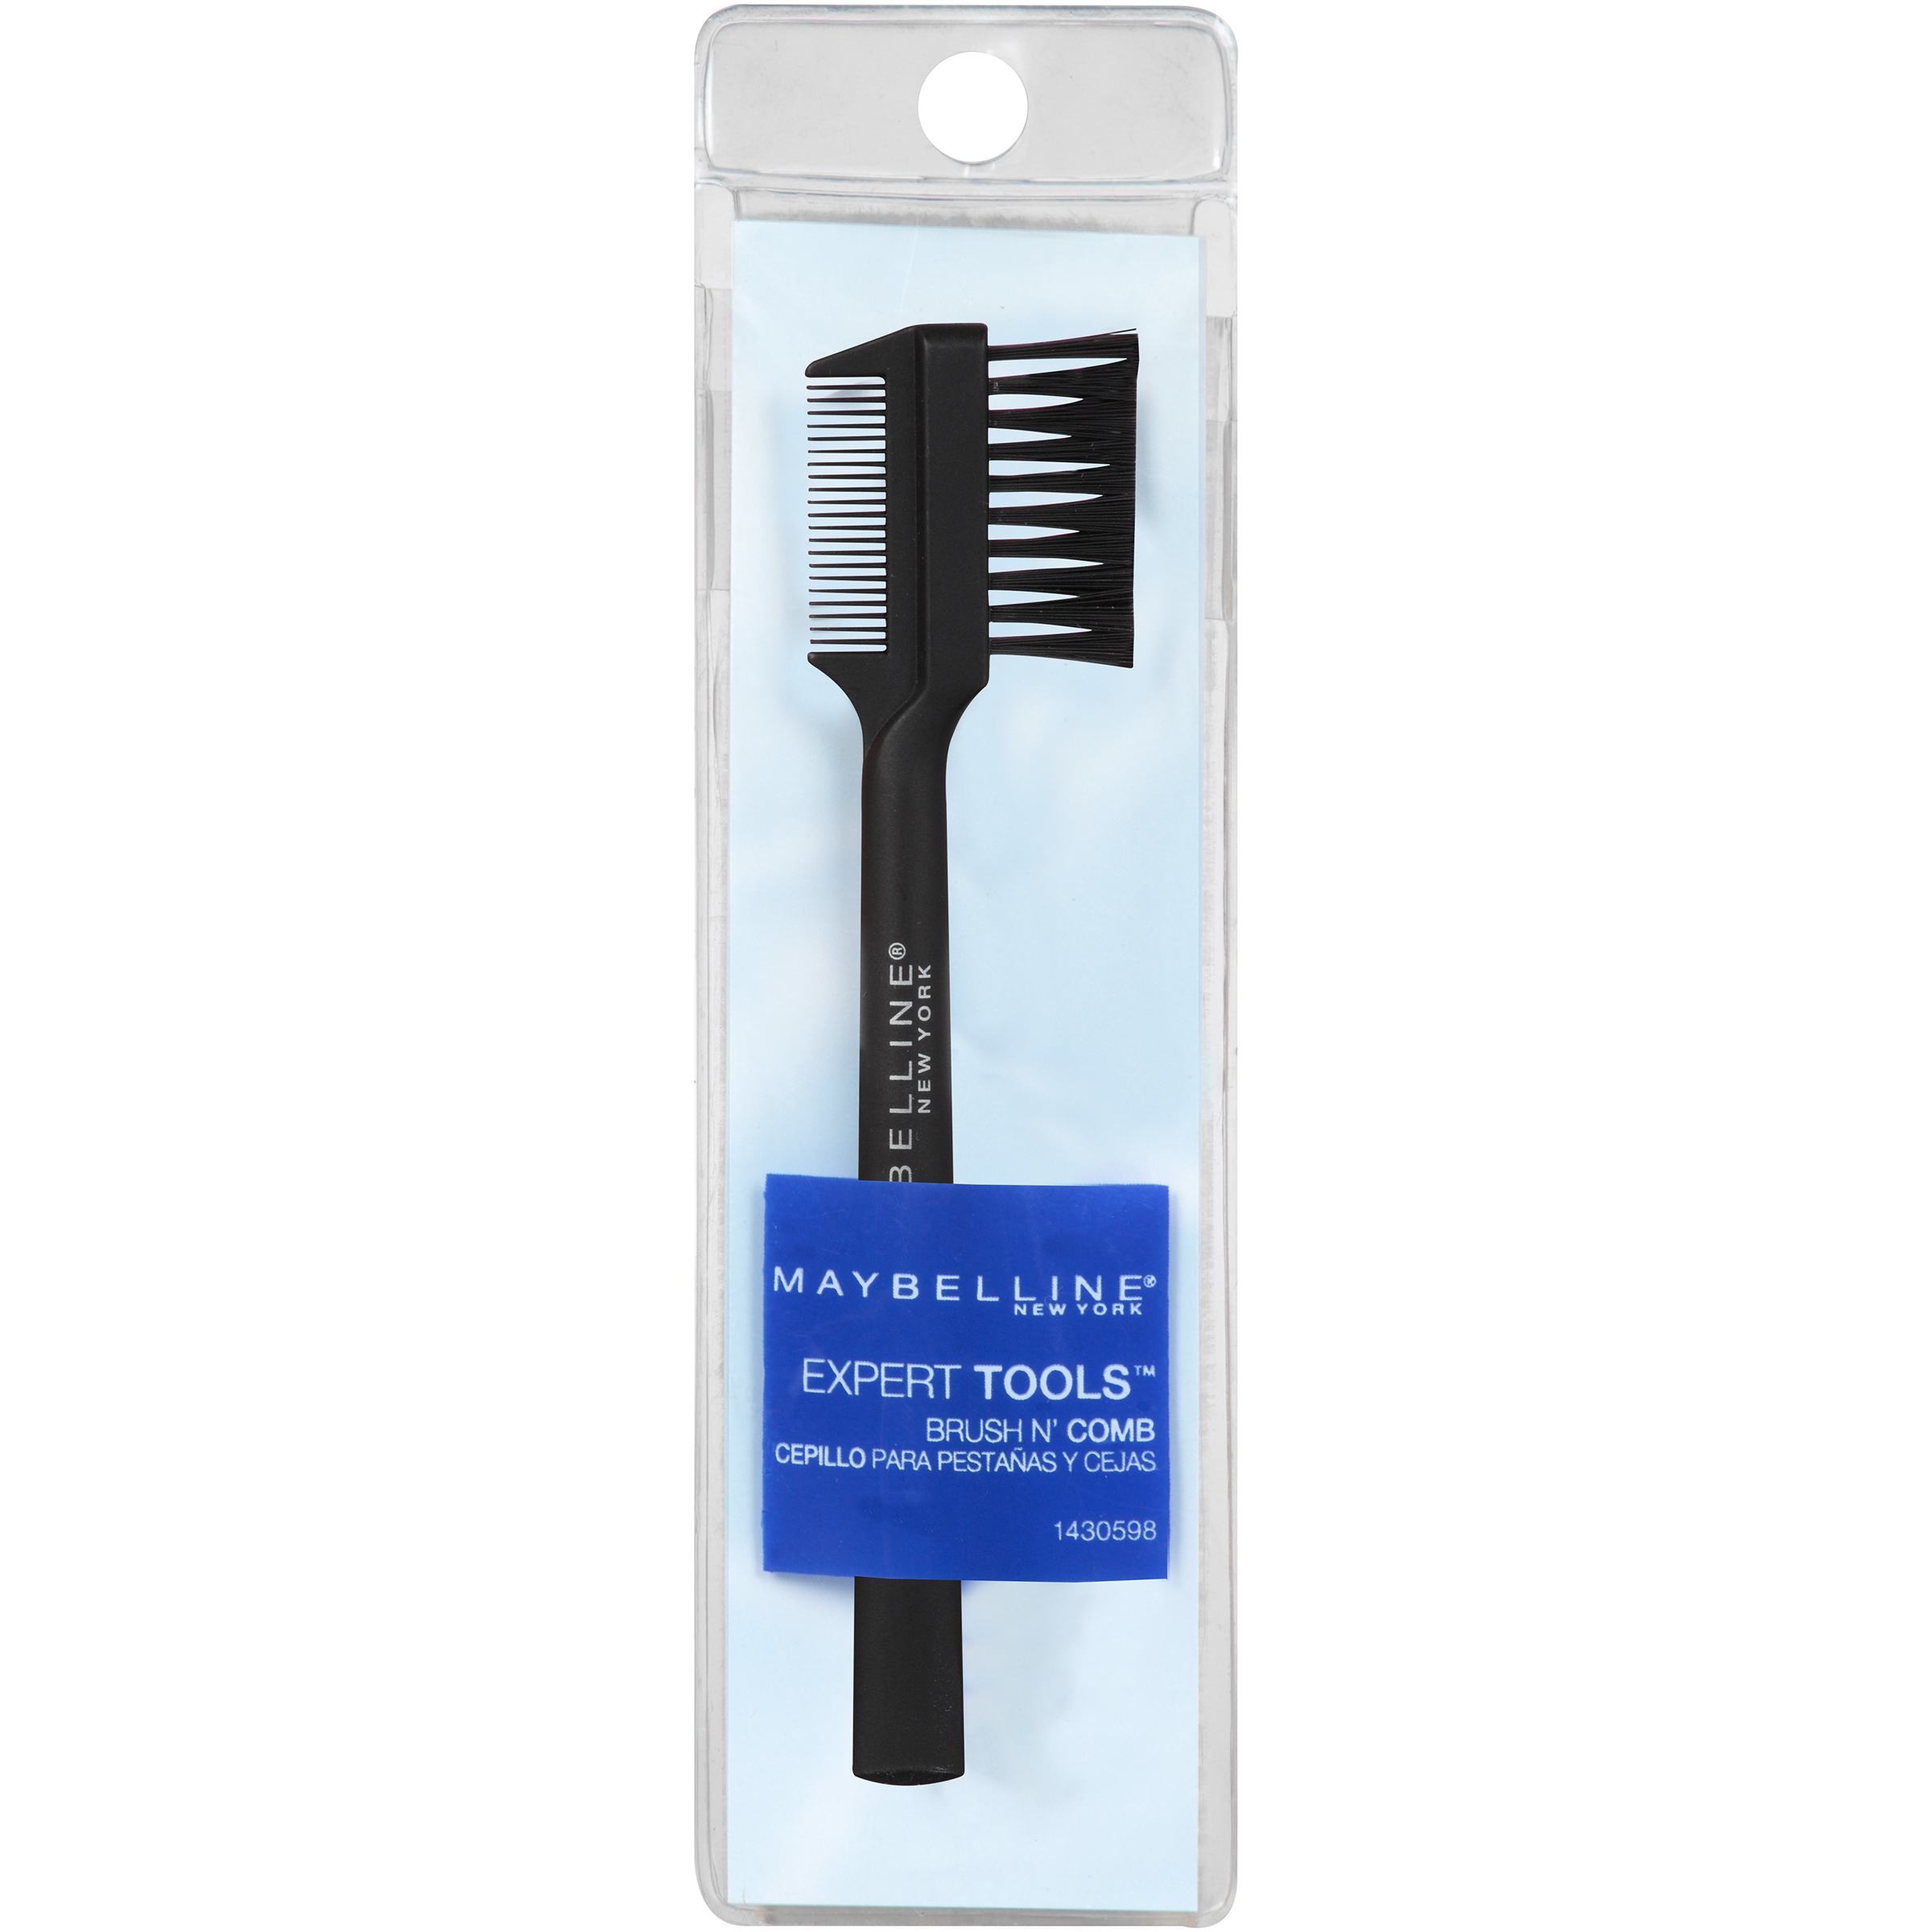 Maybelline New York Expert Tools Brush n' Comb, 1 brush